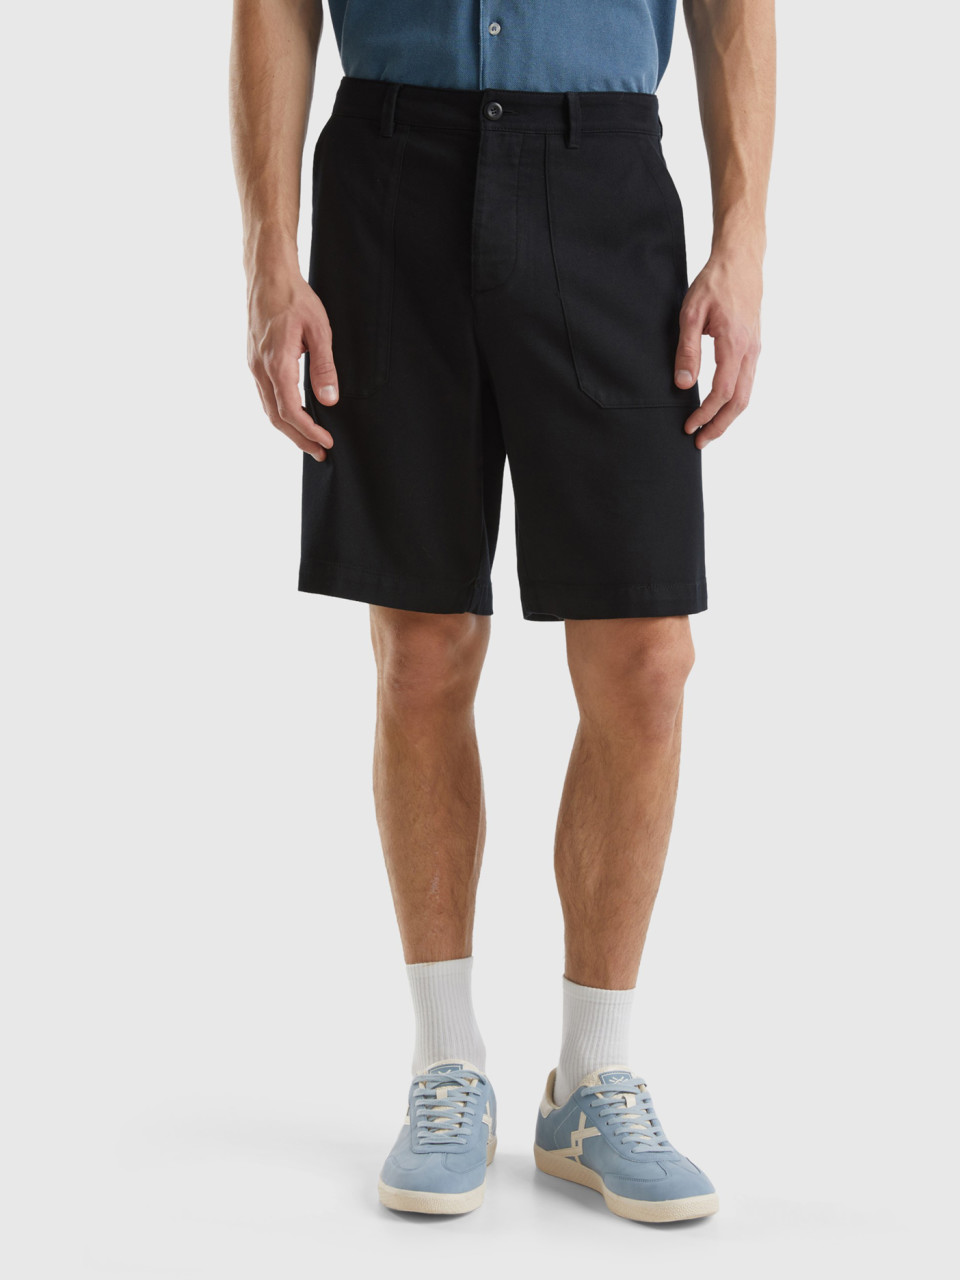 Benetton, Shorts In Modal® And Cotton Blend, Black, Men